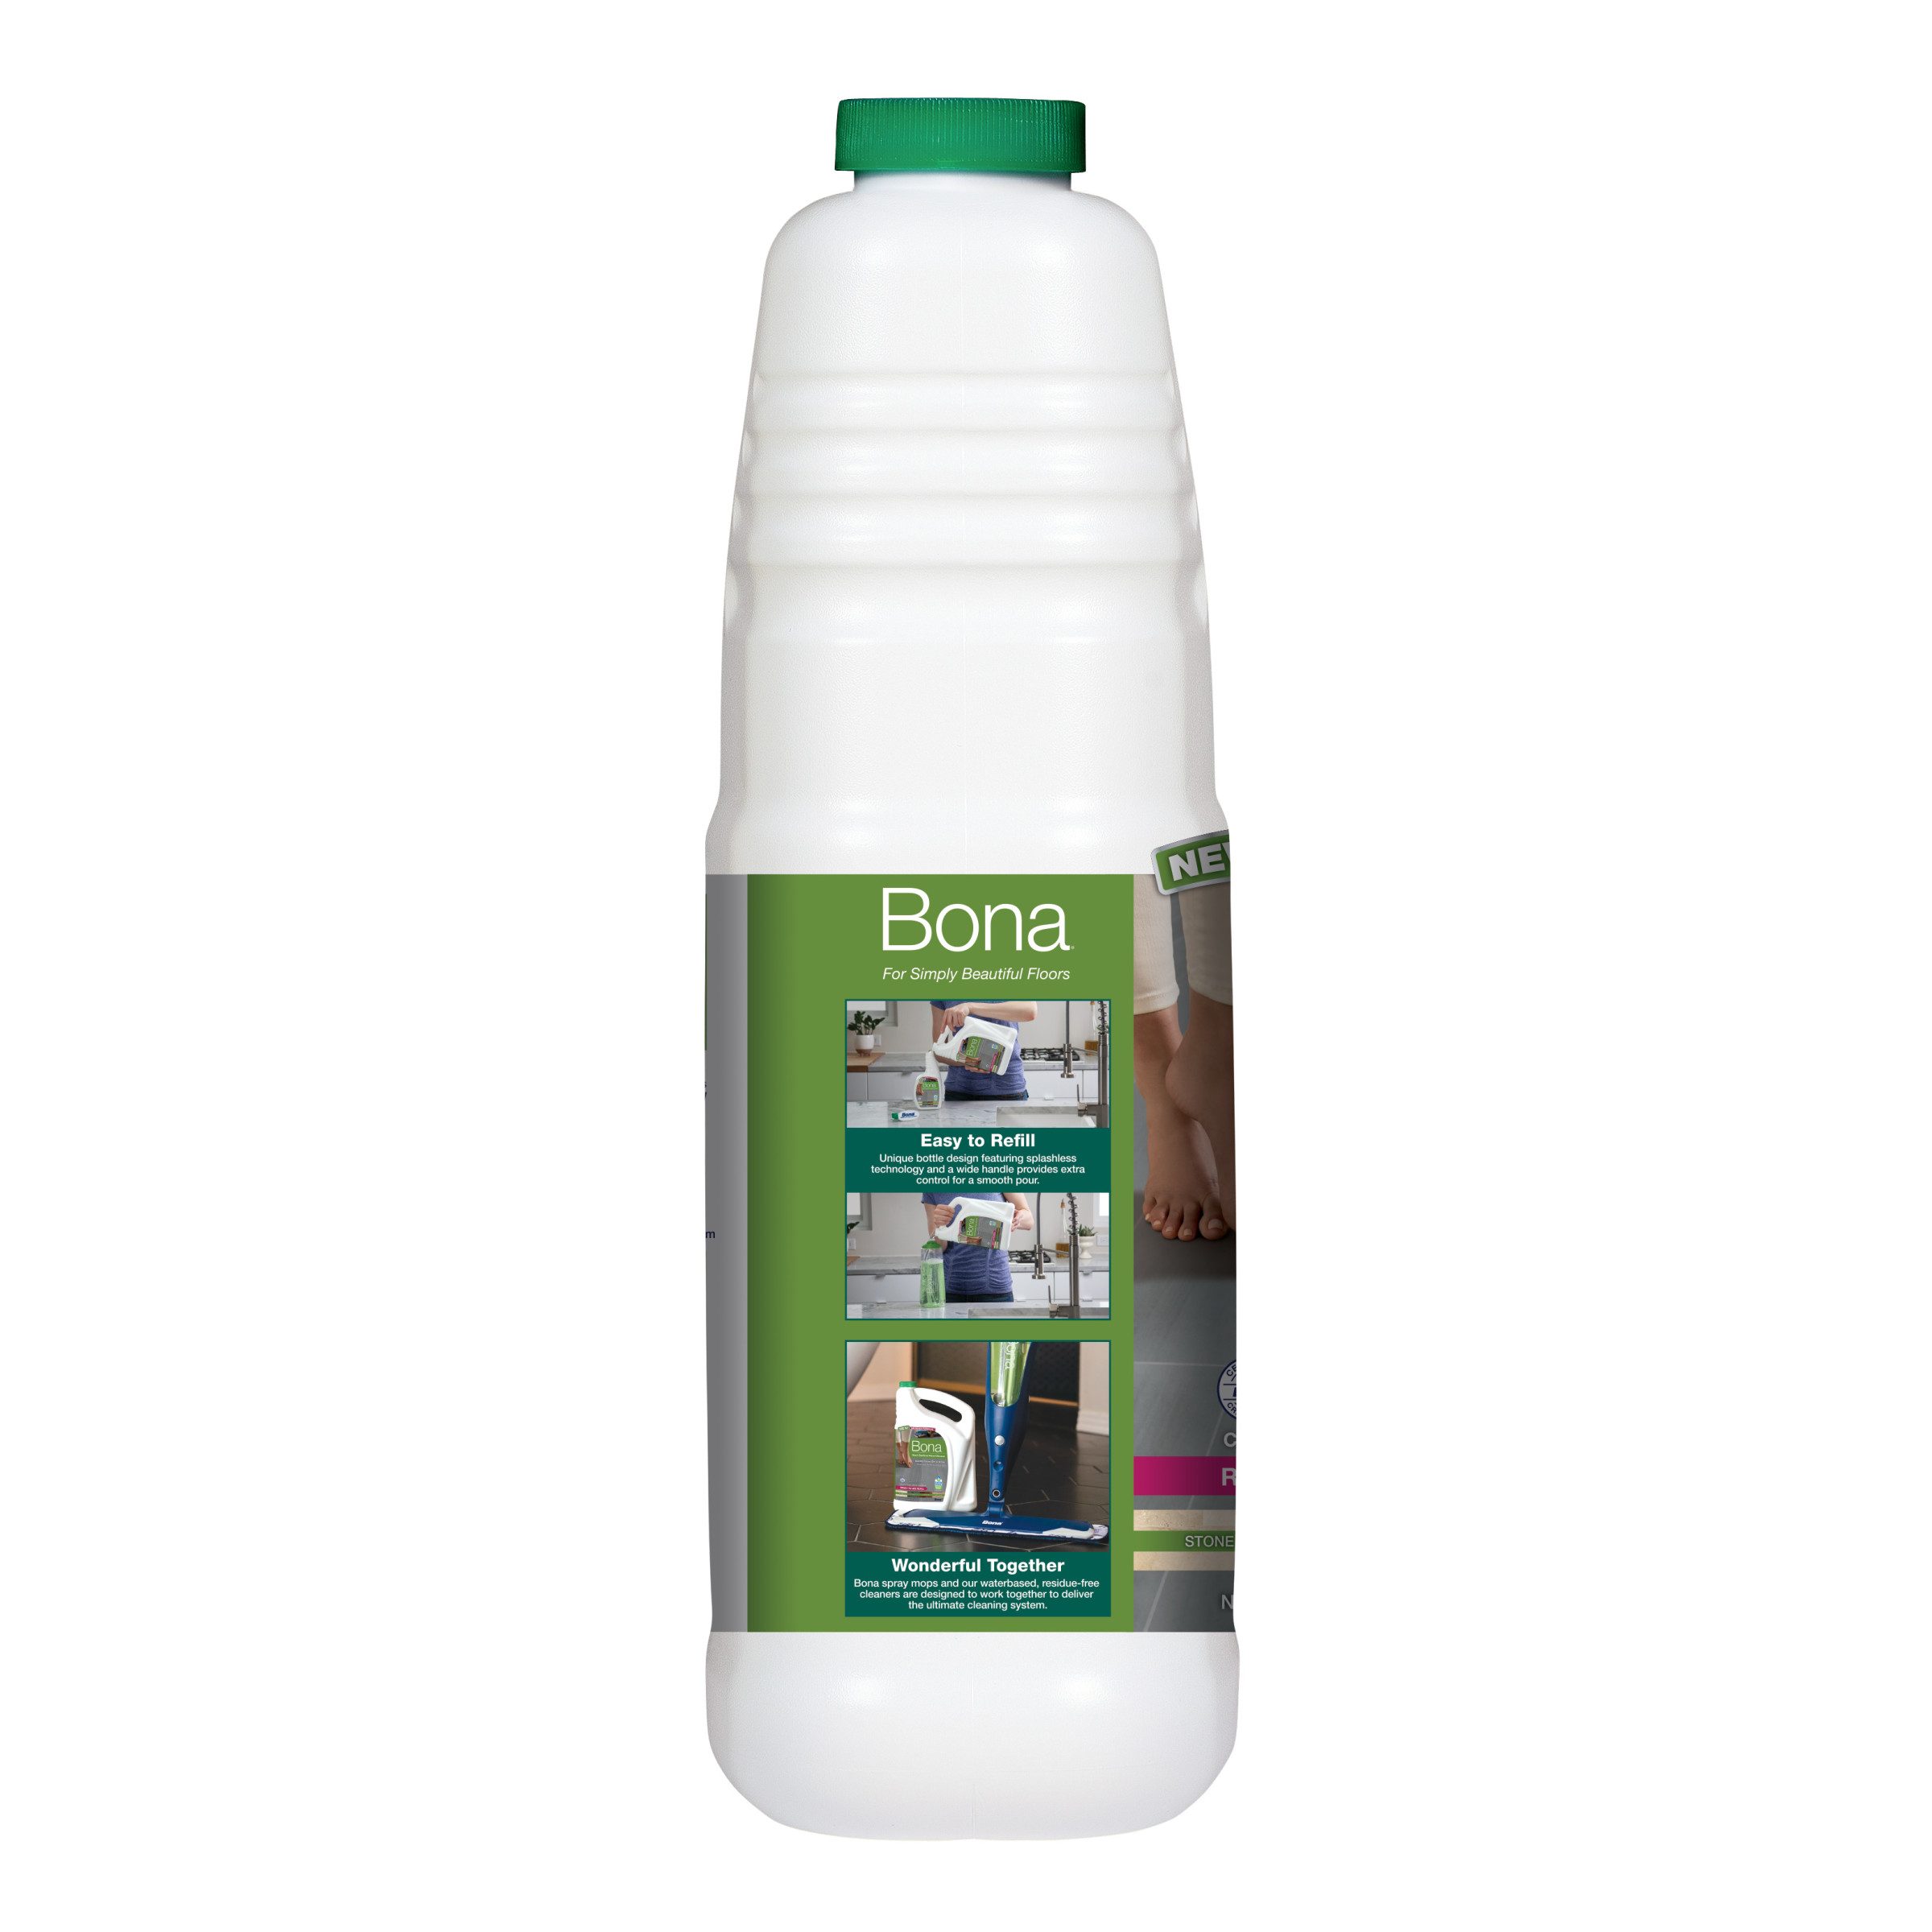 Bona Multi-Surface Floor Cleaner Refill, for Stone Tile Laminate and LVT/LVP, 64 fl oz - image 5 of 17